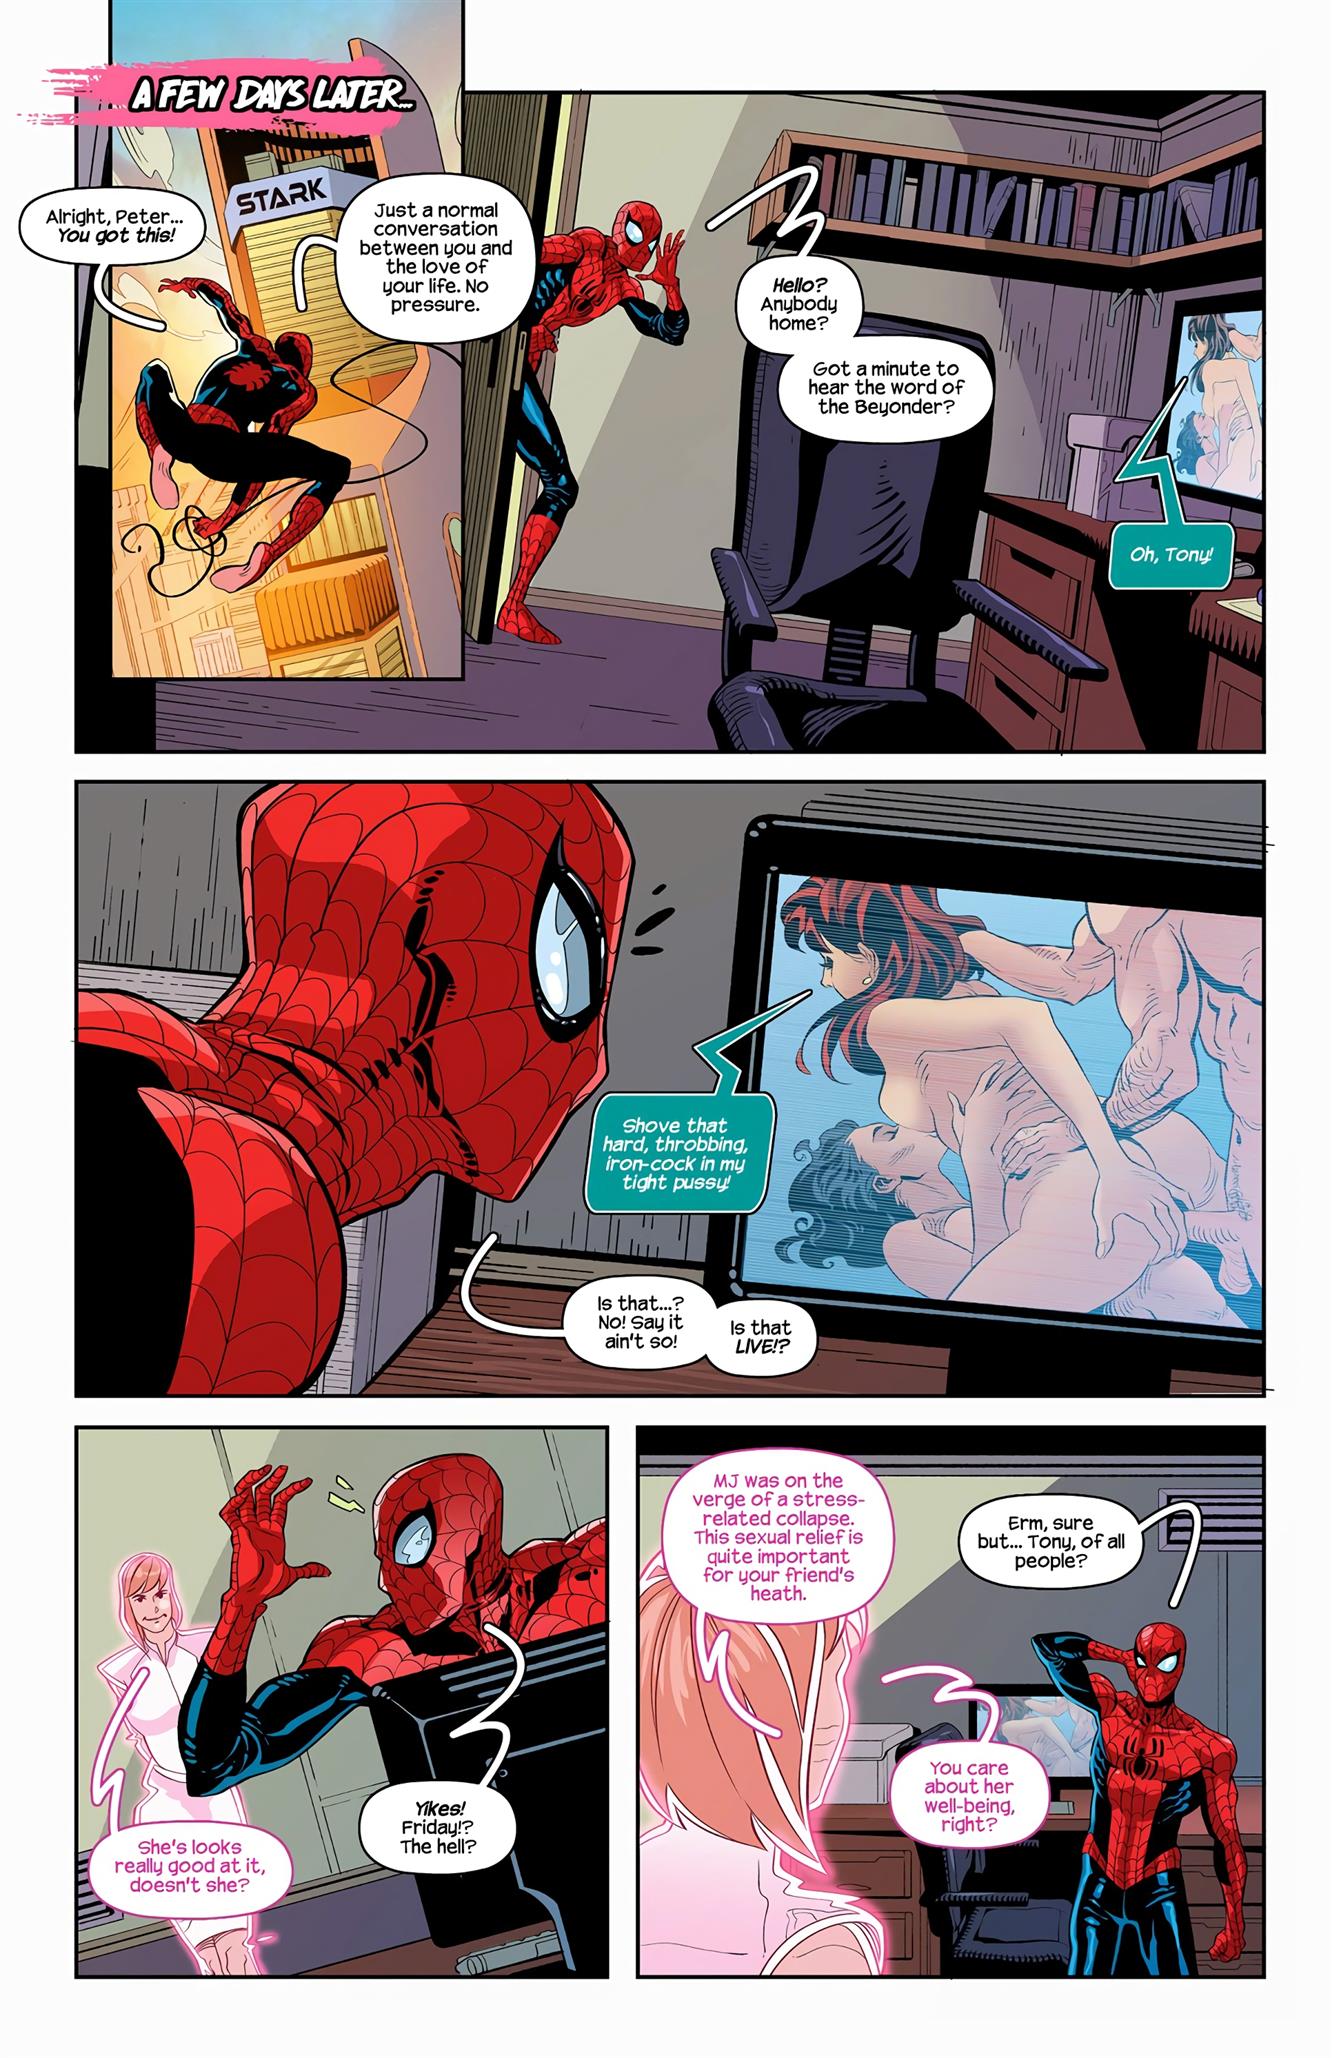 Invincible Iron Spider (Spider-Man) [Tracy Scops]